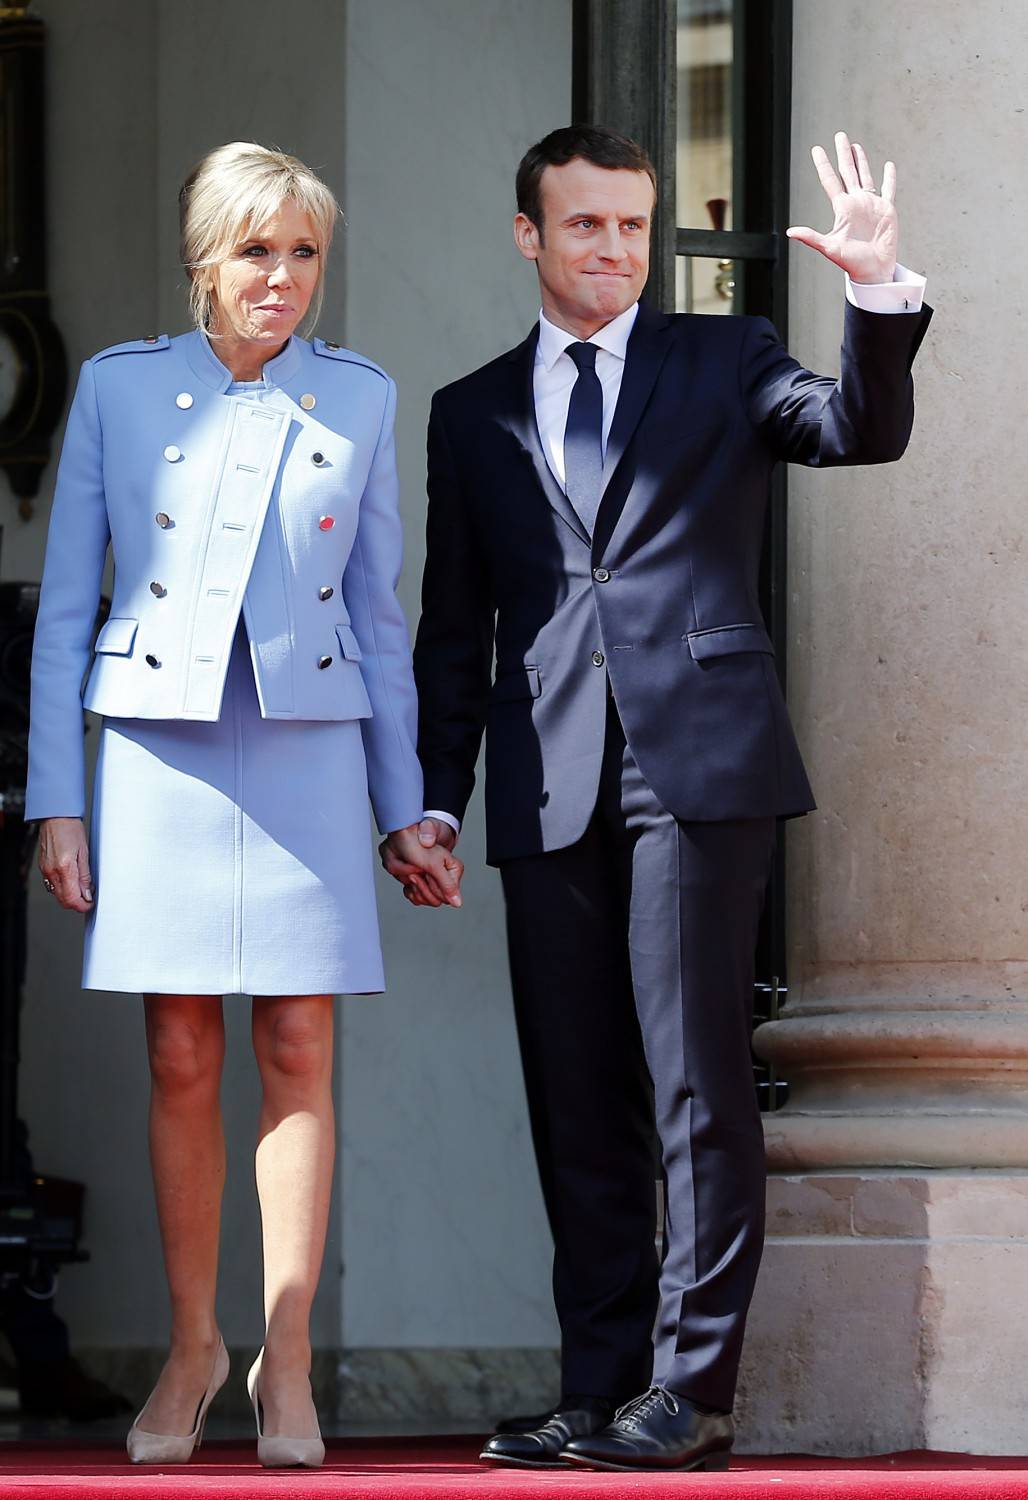 Liti furiose fra Macron e Brigitte: "Urla da far tremare i muri dell'Eliseo"